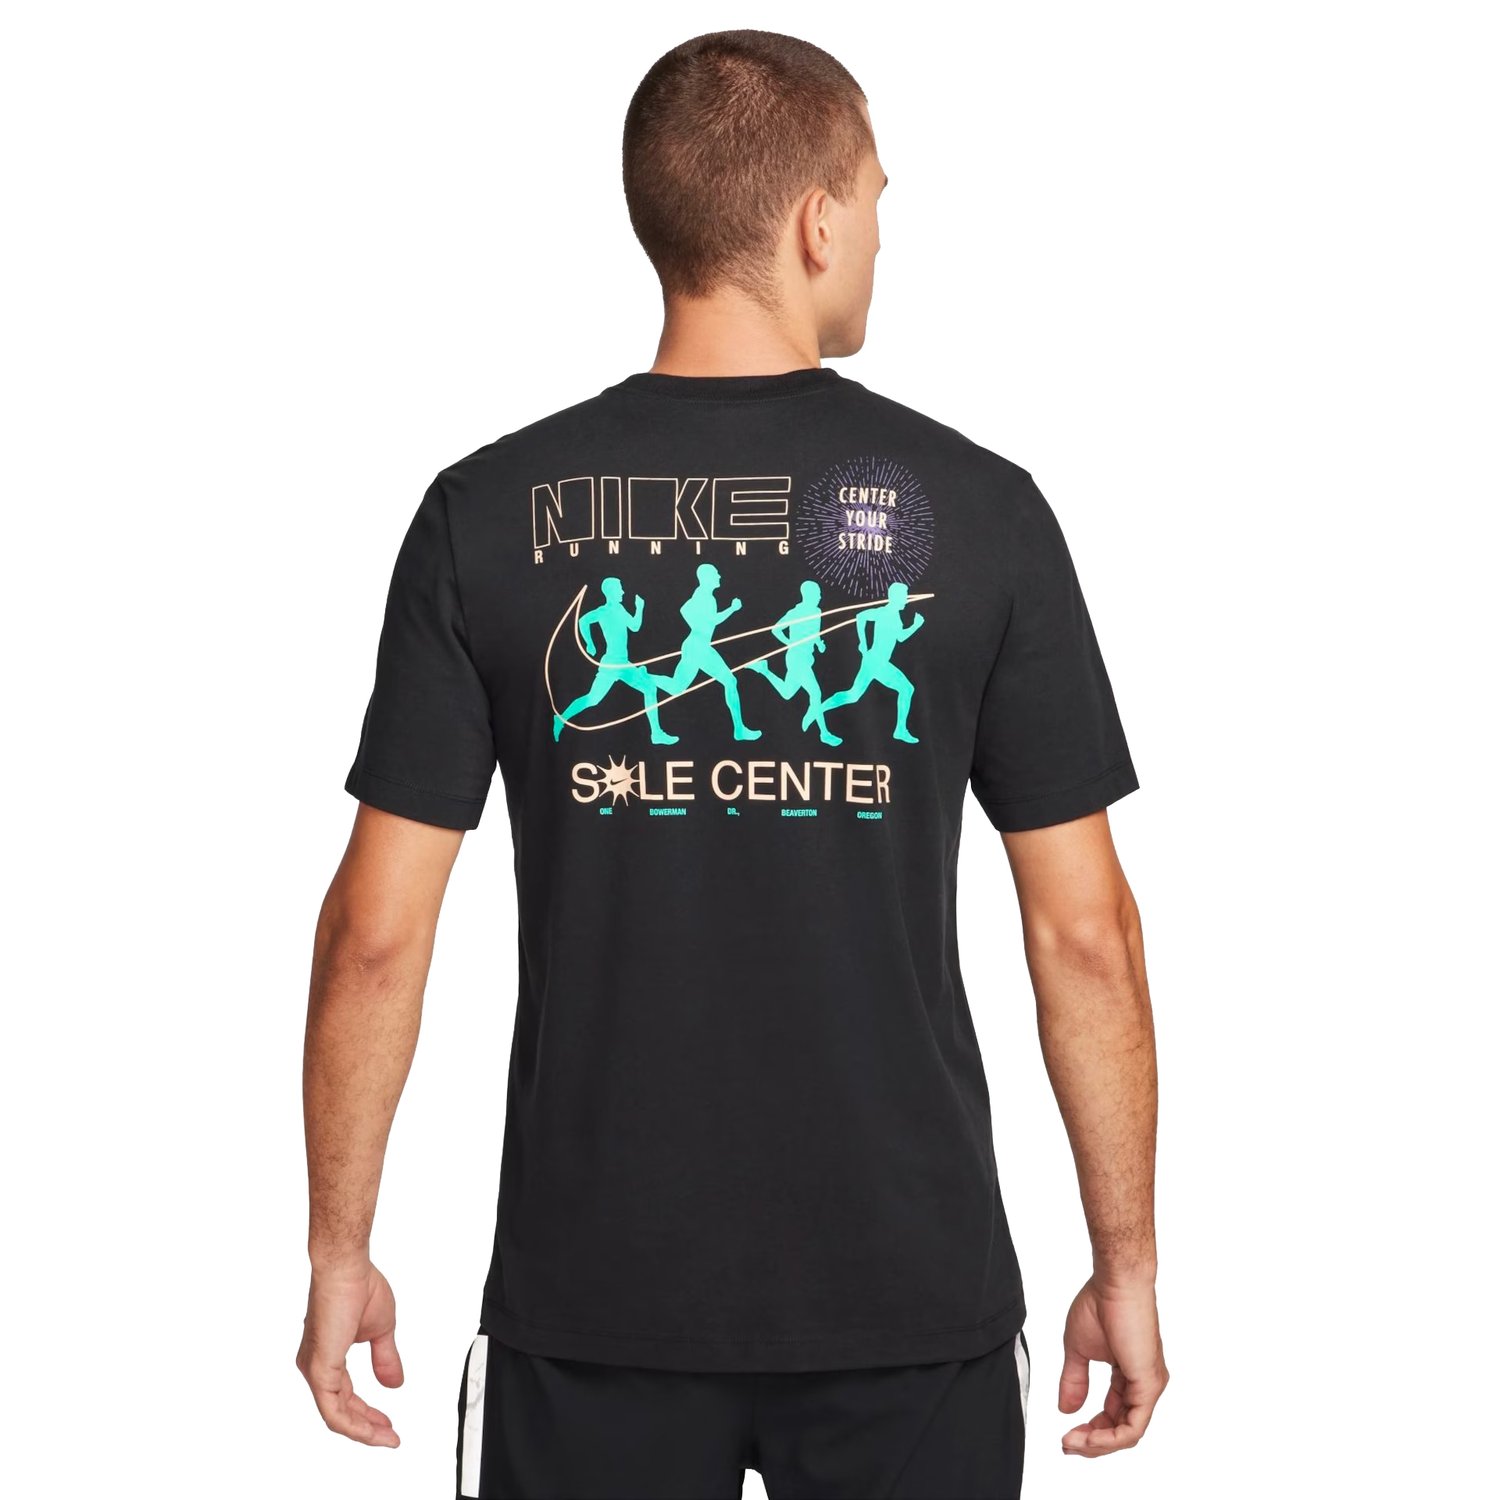 Camiseta Nike Pro Dri-Fit - Masculina - Fátima Esportes